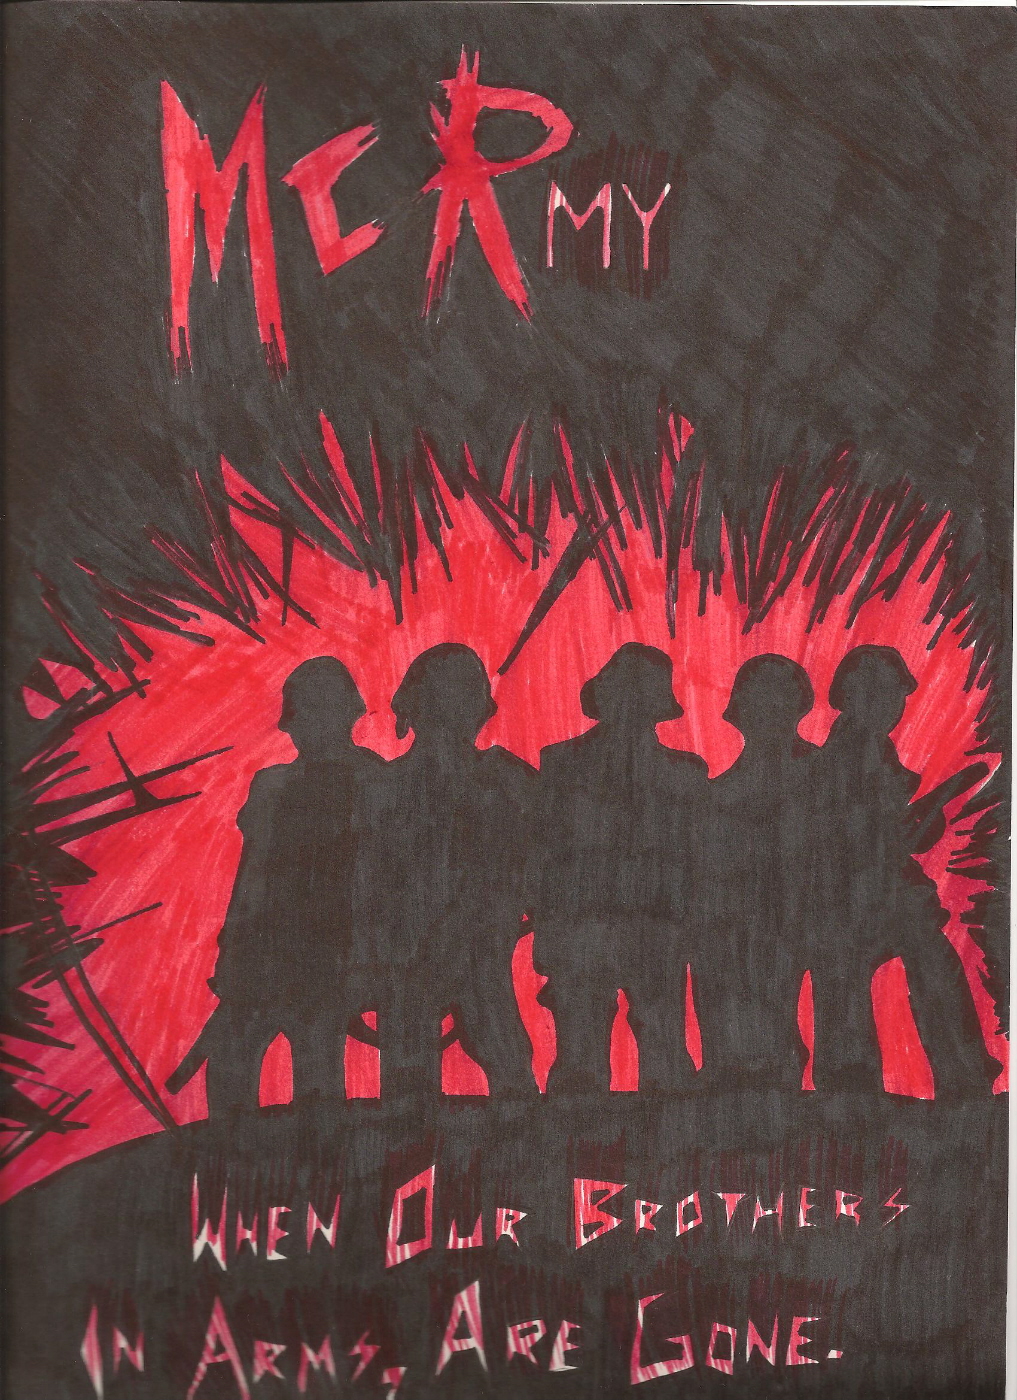 MCRmy by KickButtRobin